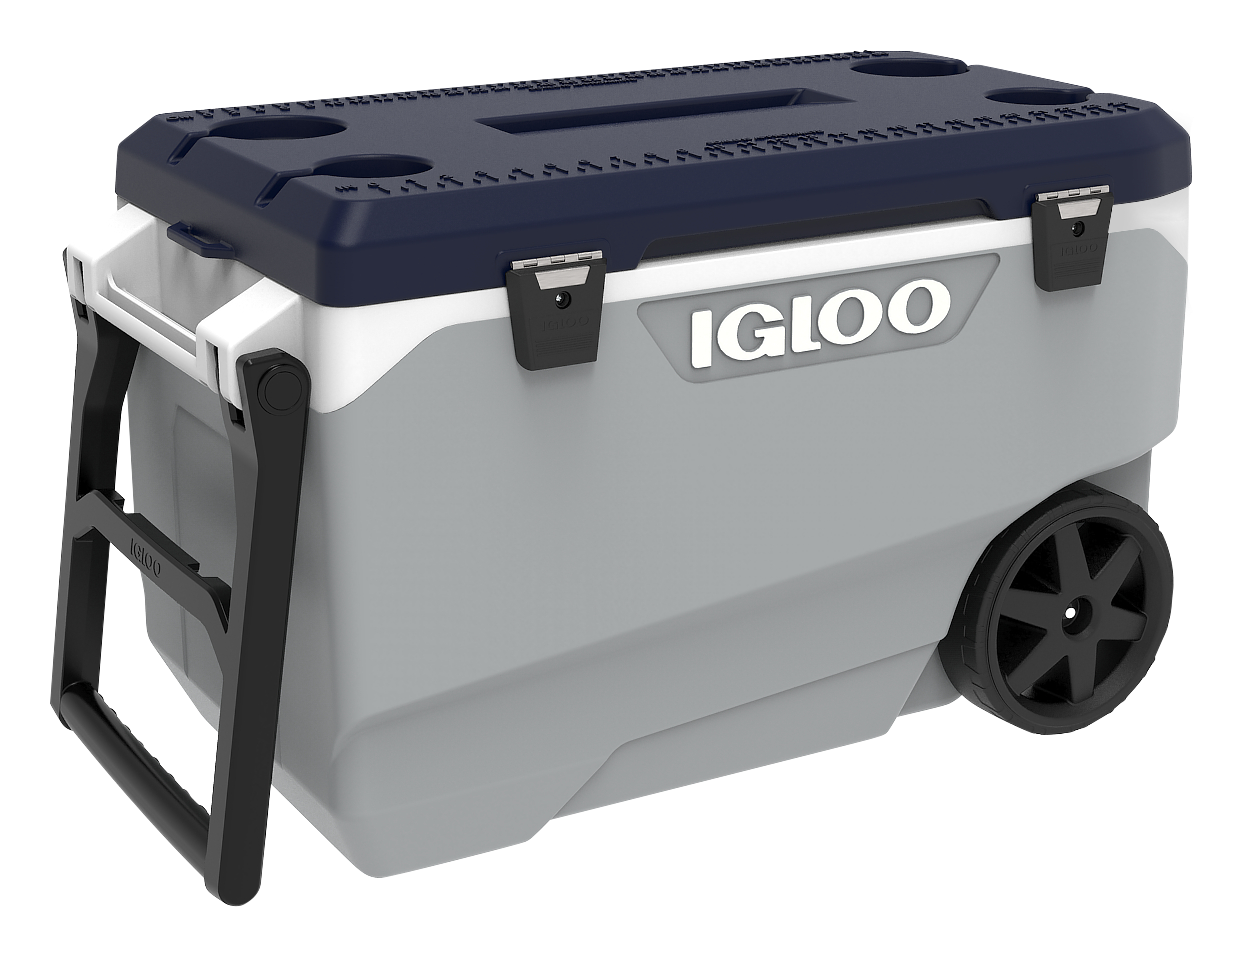 Igloo Maxcold Ice Gel Pack - 8 oz bag